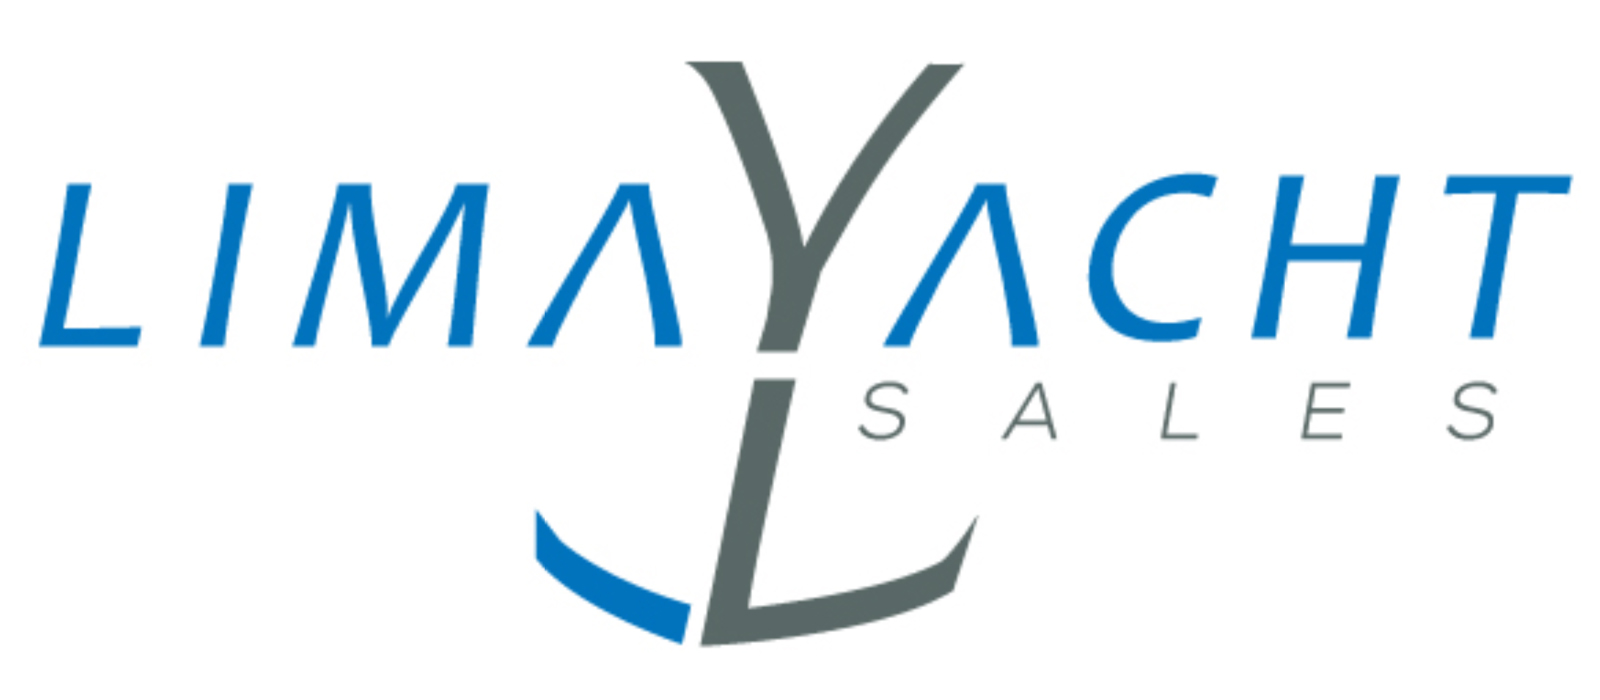 lima-yachtsales.com logo